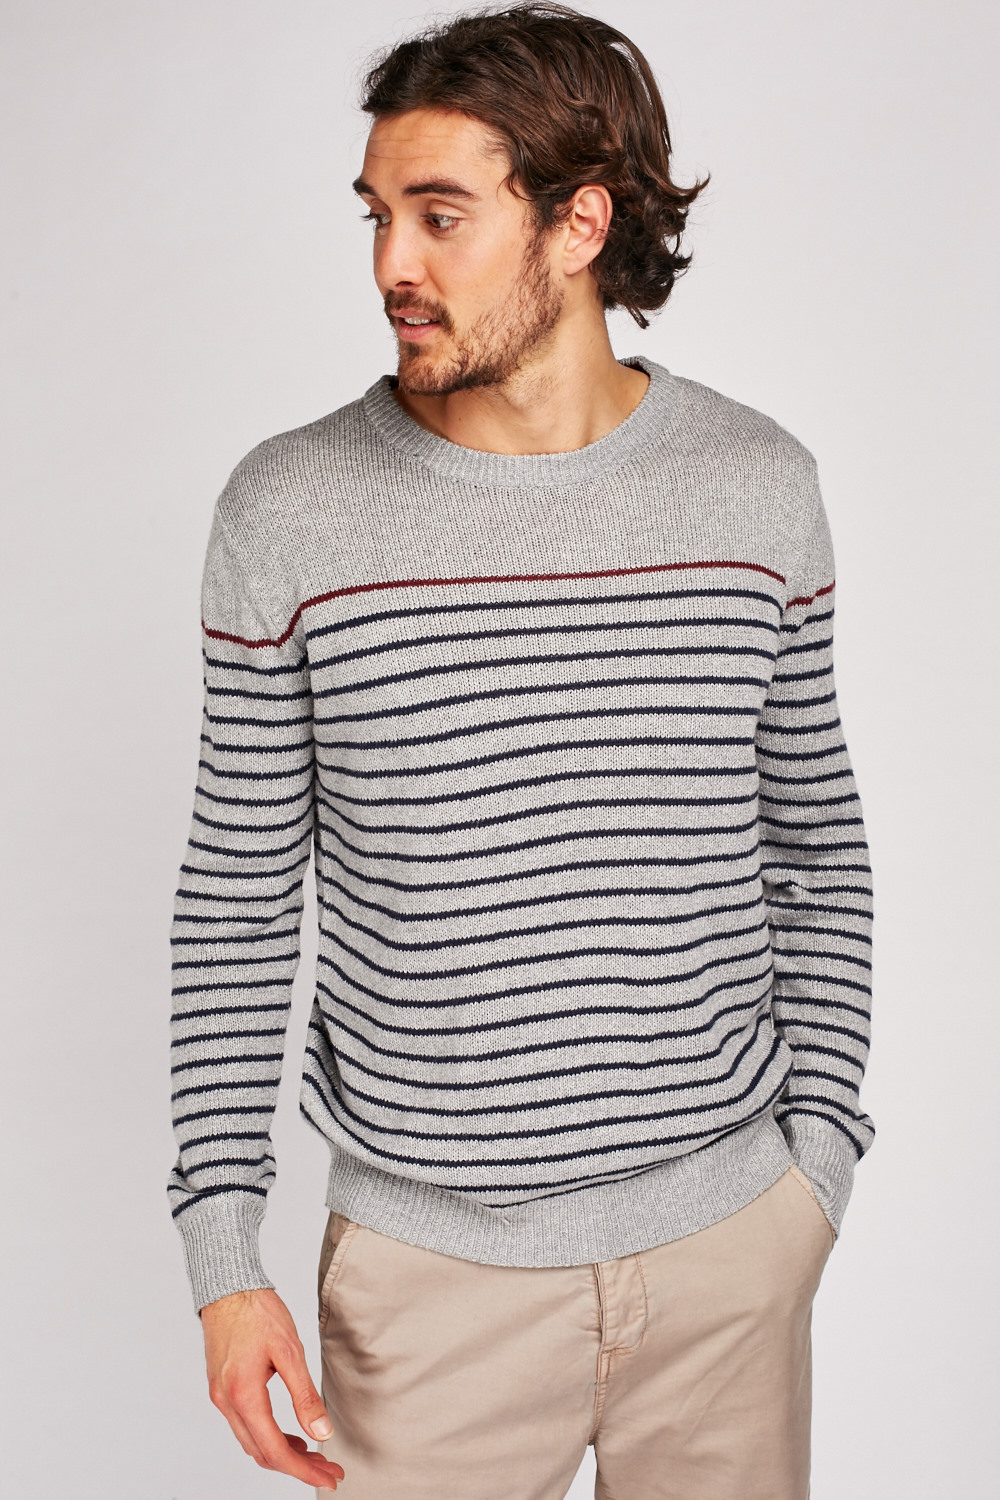 Striped Herringbone Knit Sweater - Just $7